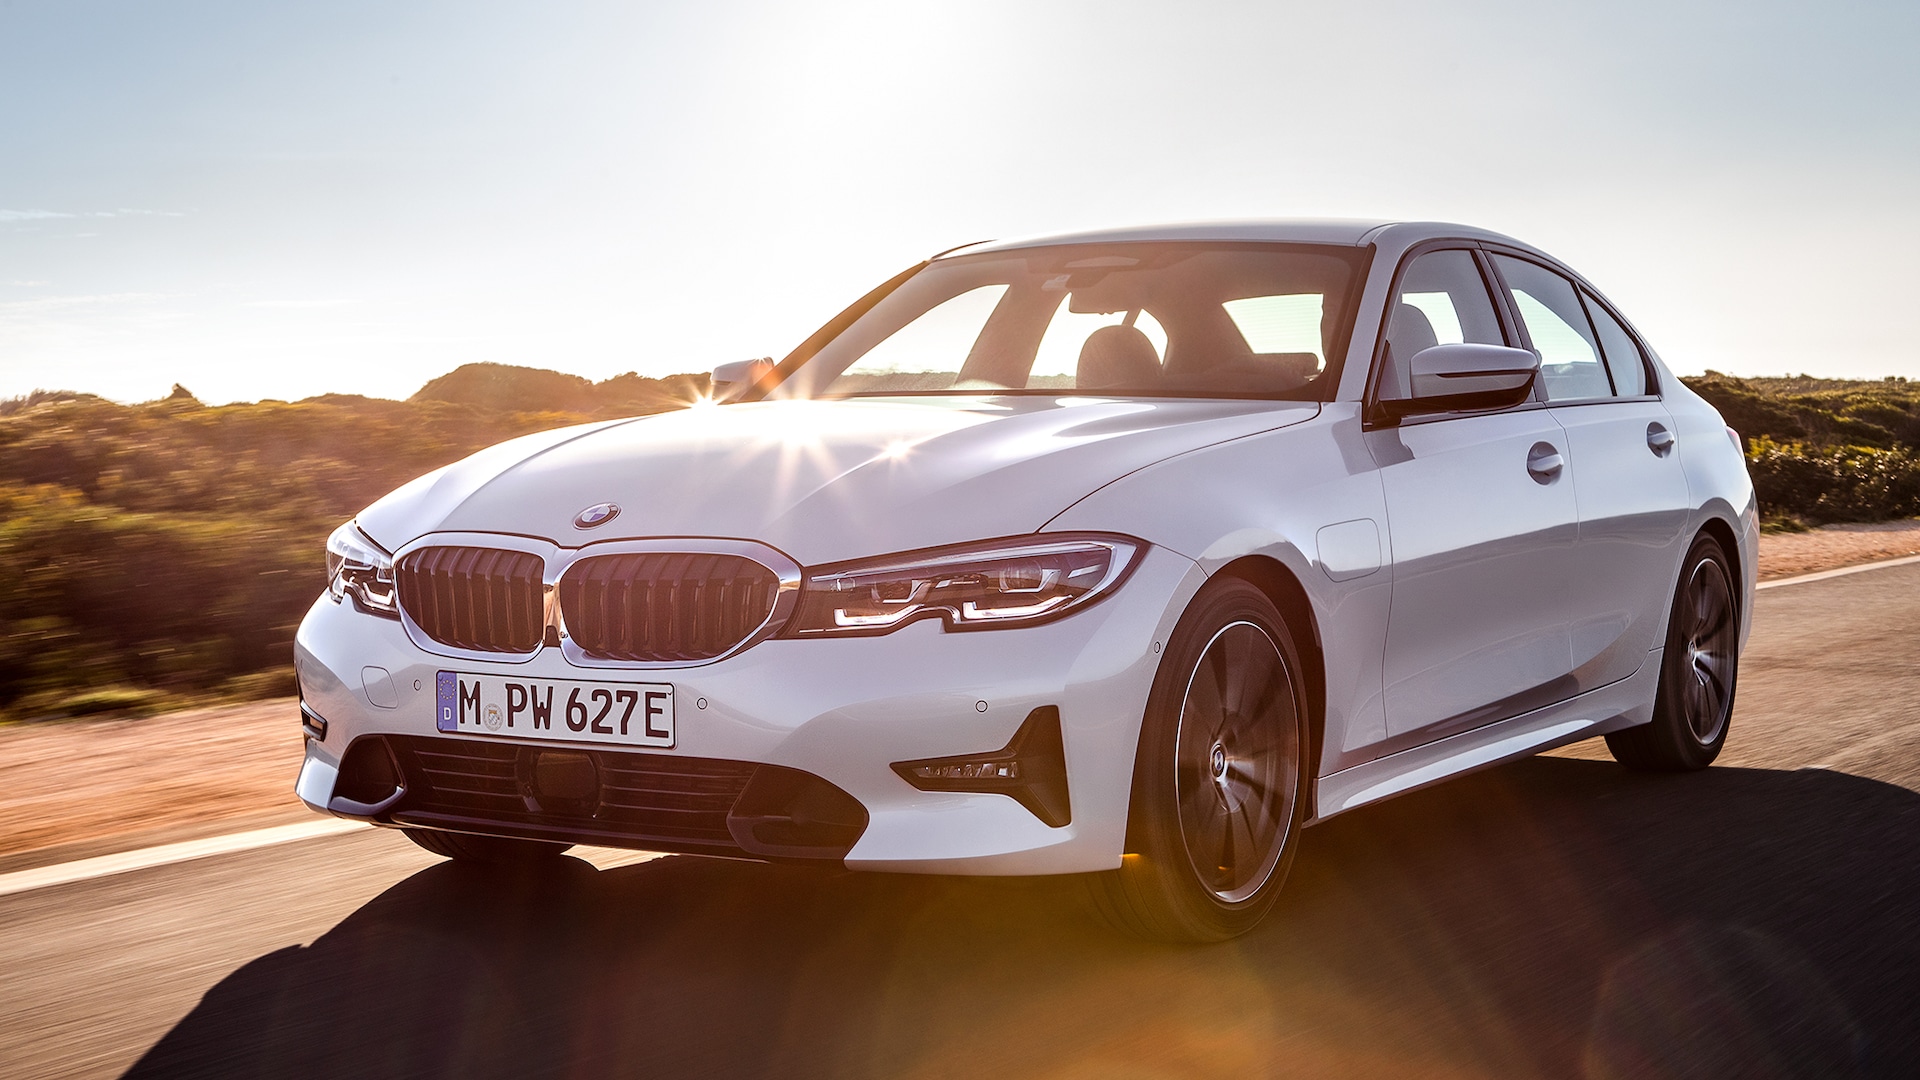 BMW 330e Plug-In Hybrid Returns With 50 Percent More EV Range